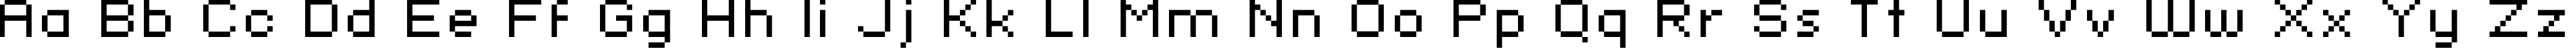 Пример написания английского алфавита шрифтом standard 07_54